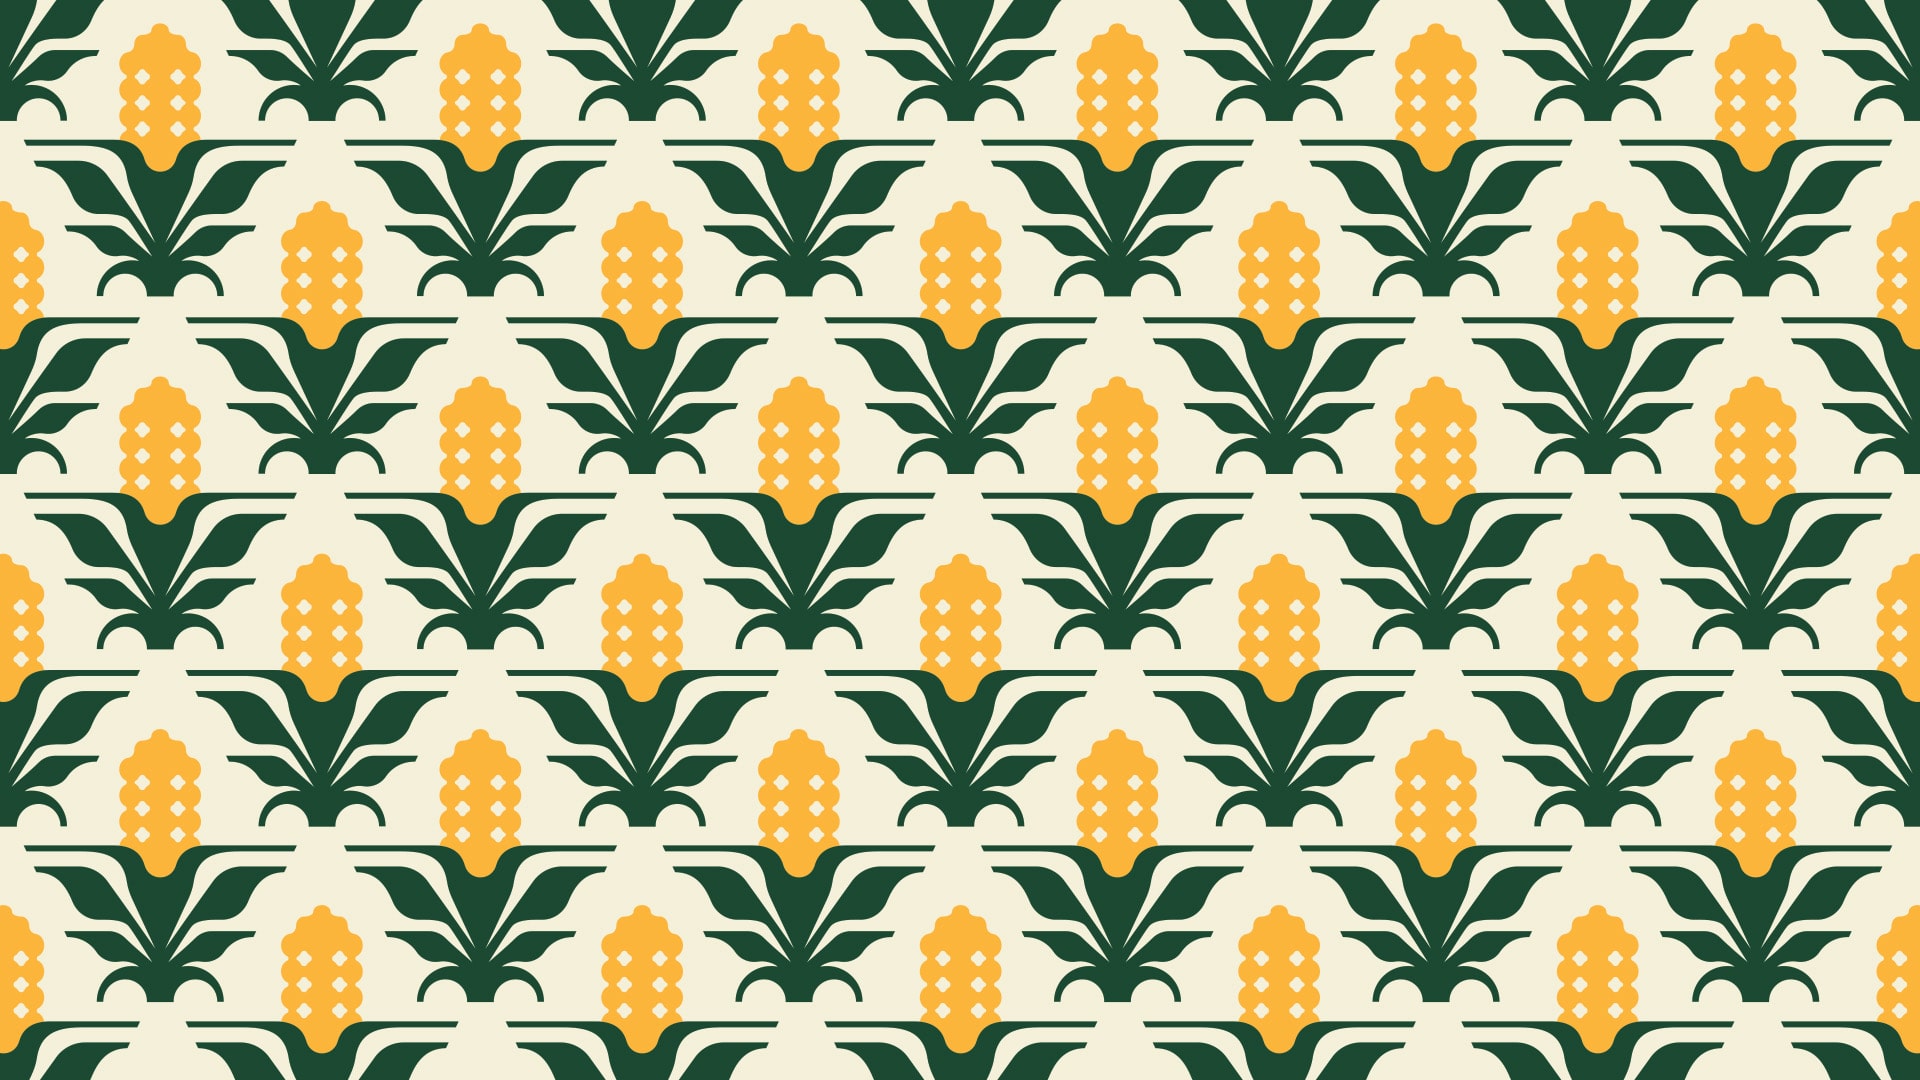 Dundee Popcorn Branding: Corn Pattern Design